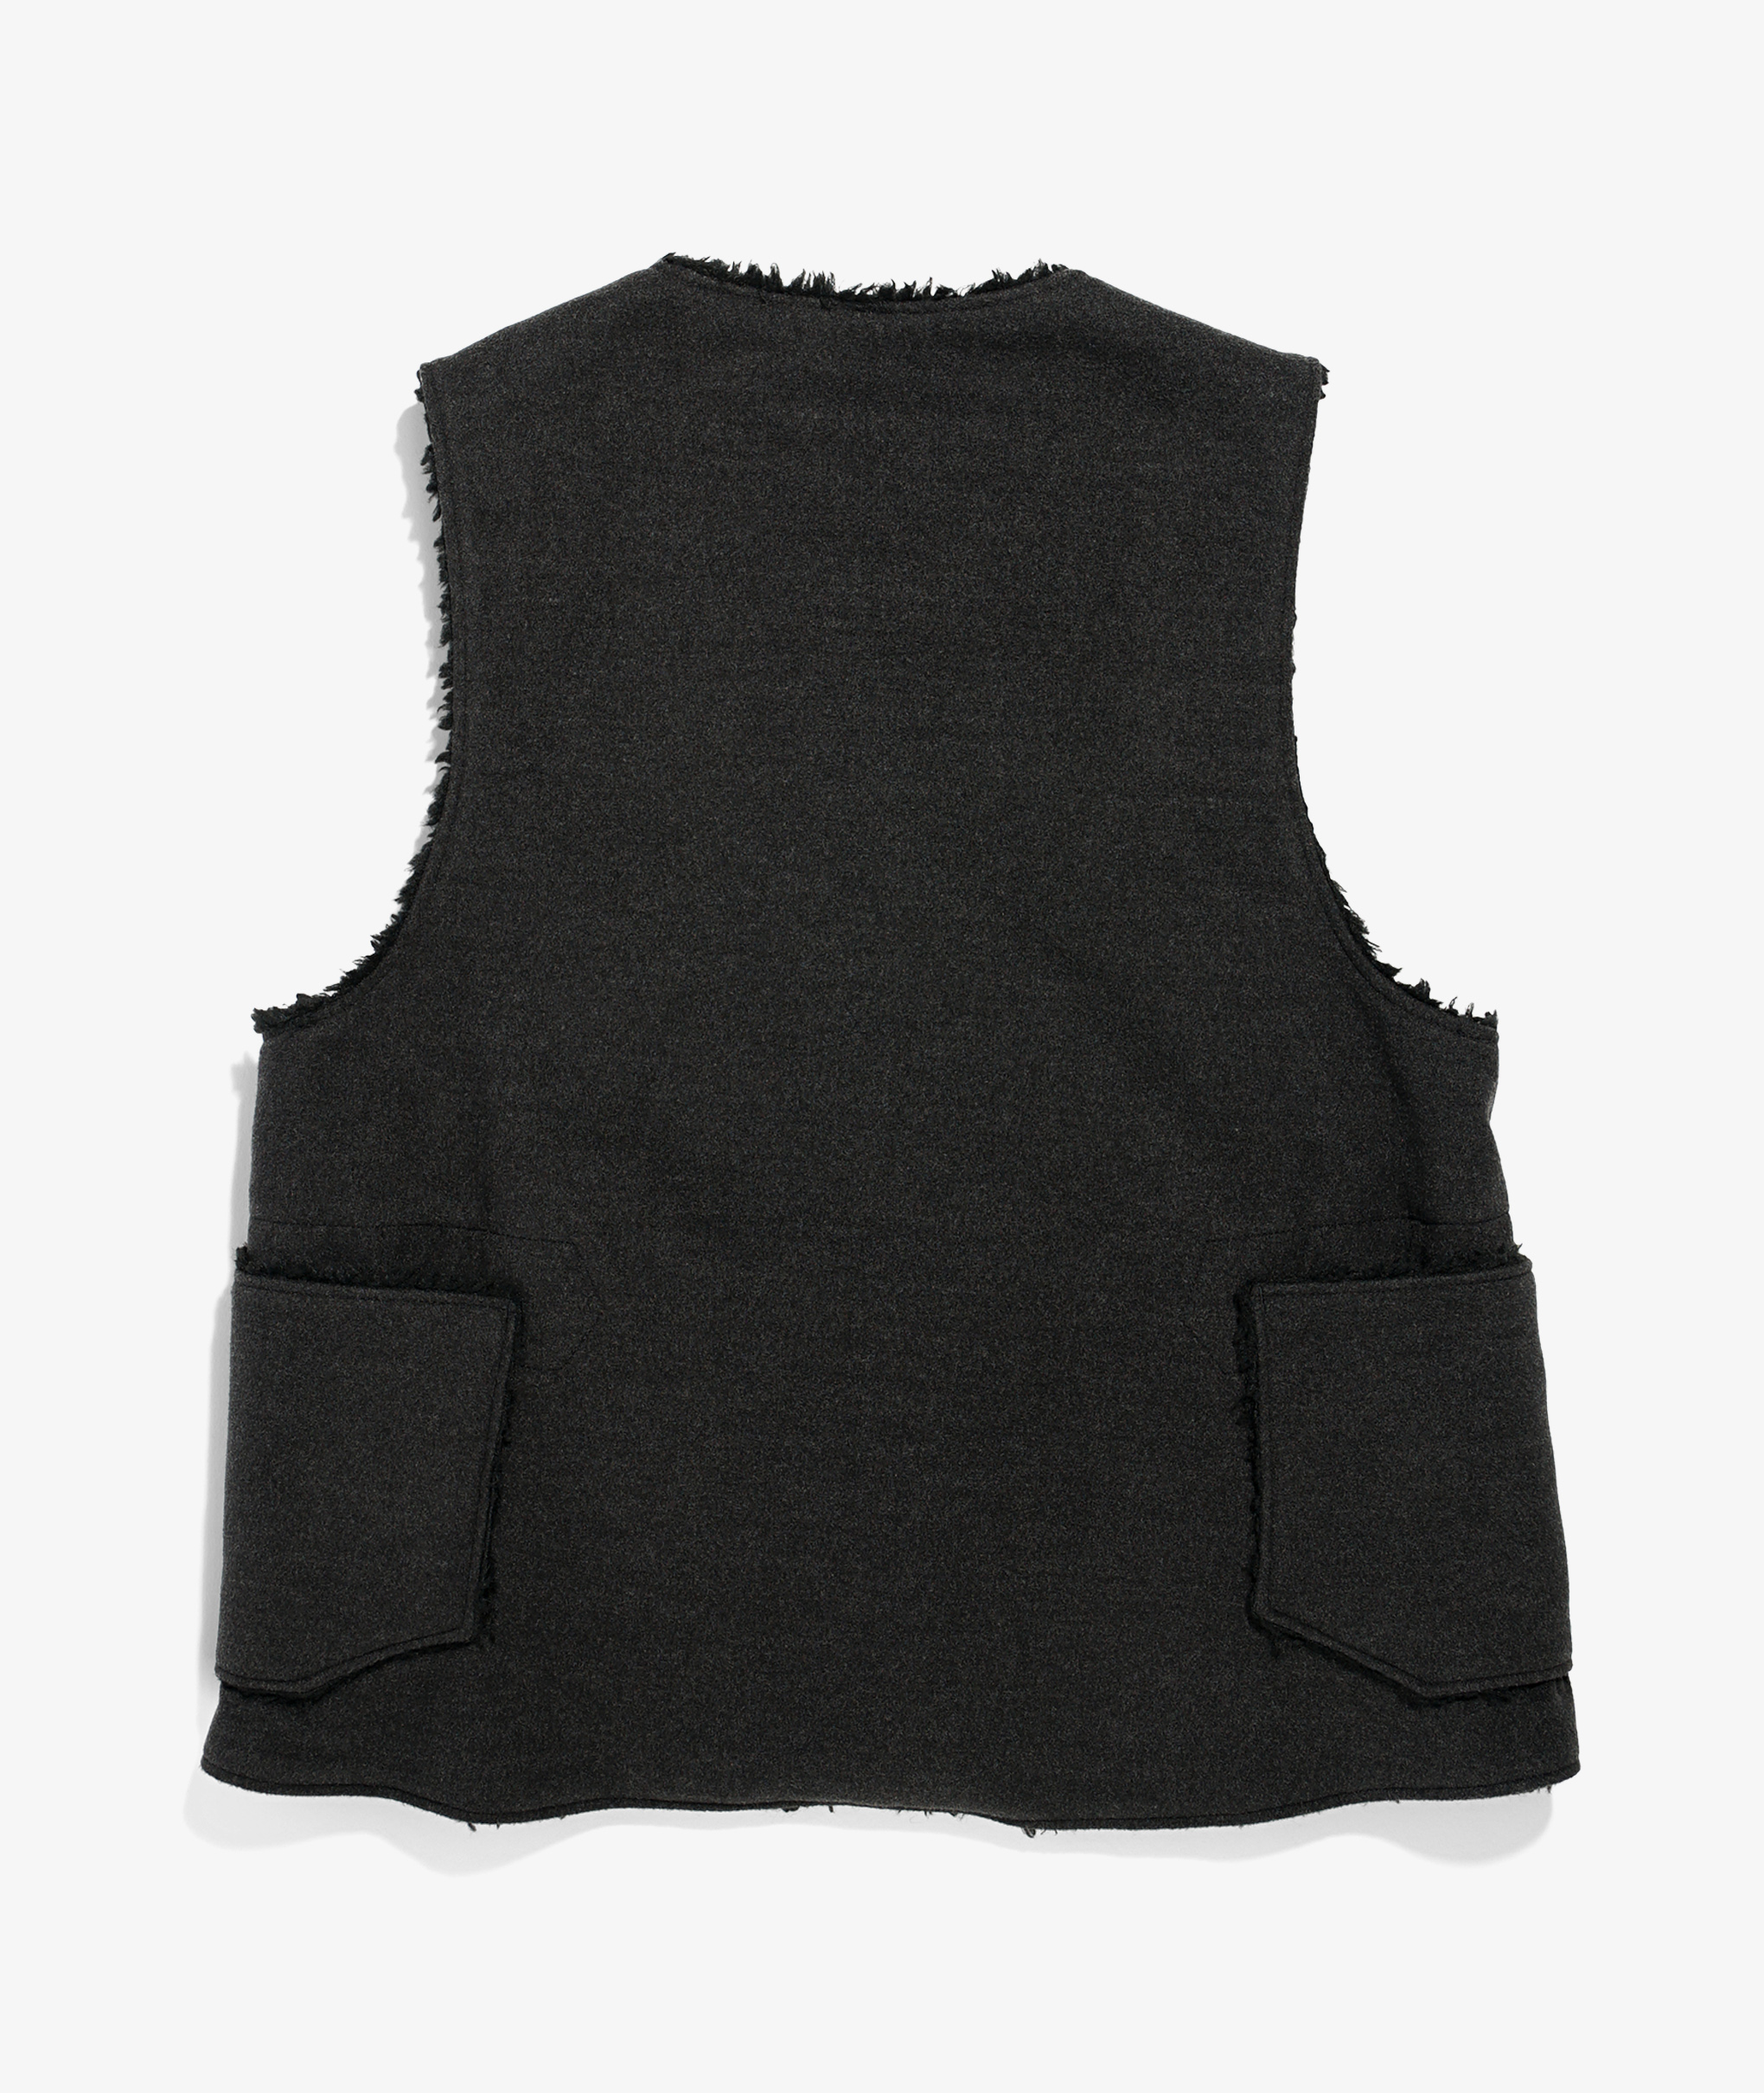 engineered garments 18aw over vest サイズL - トップス